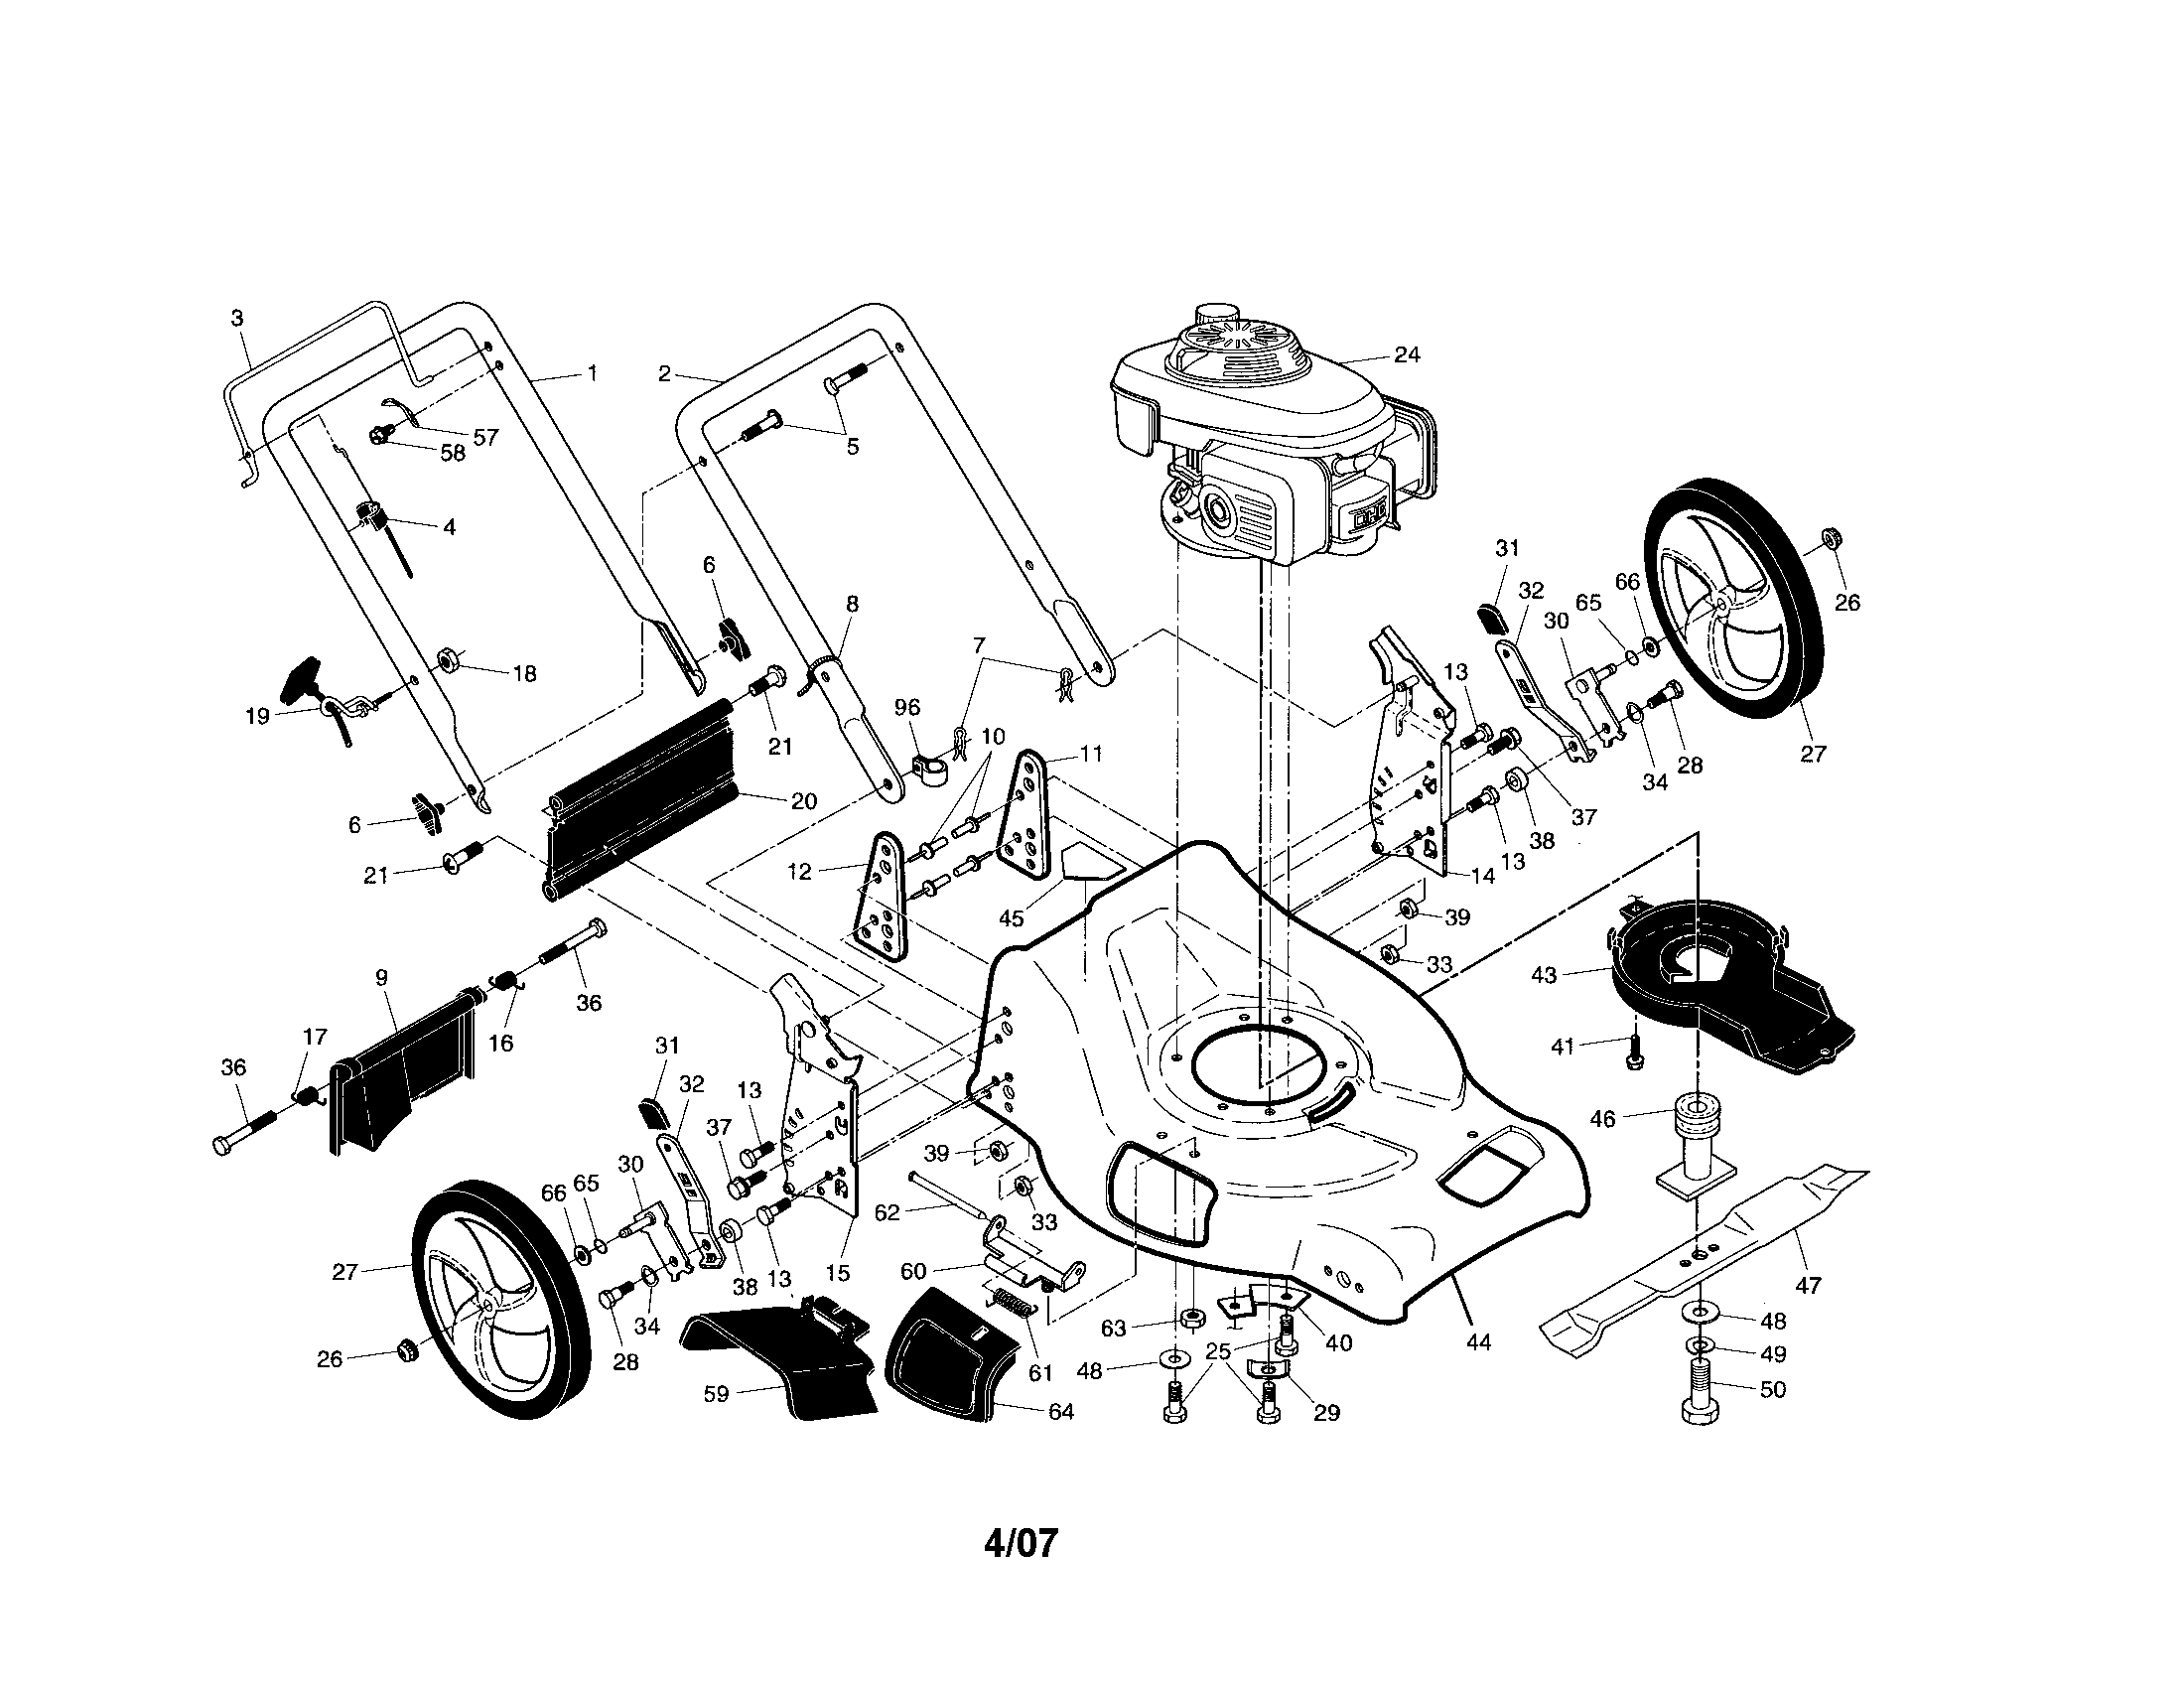 Craftsman Lawn Mower Parts